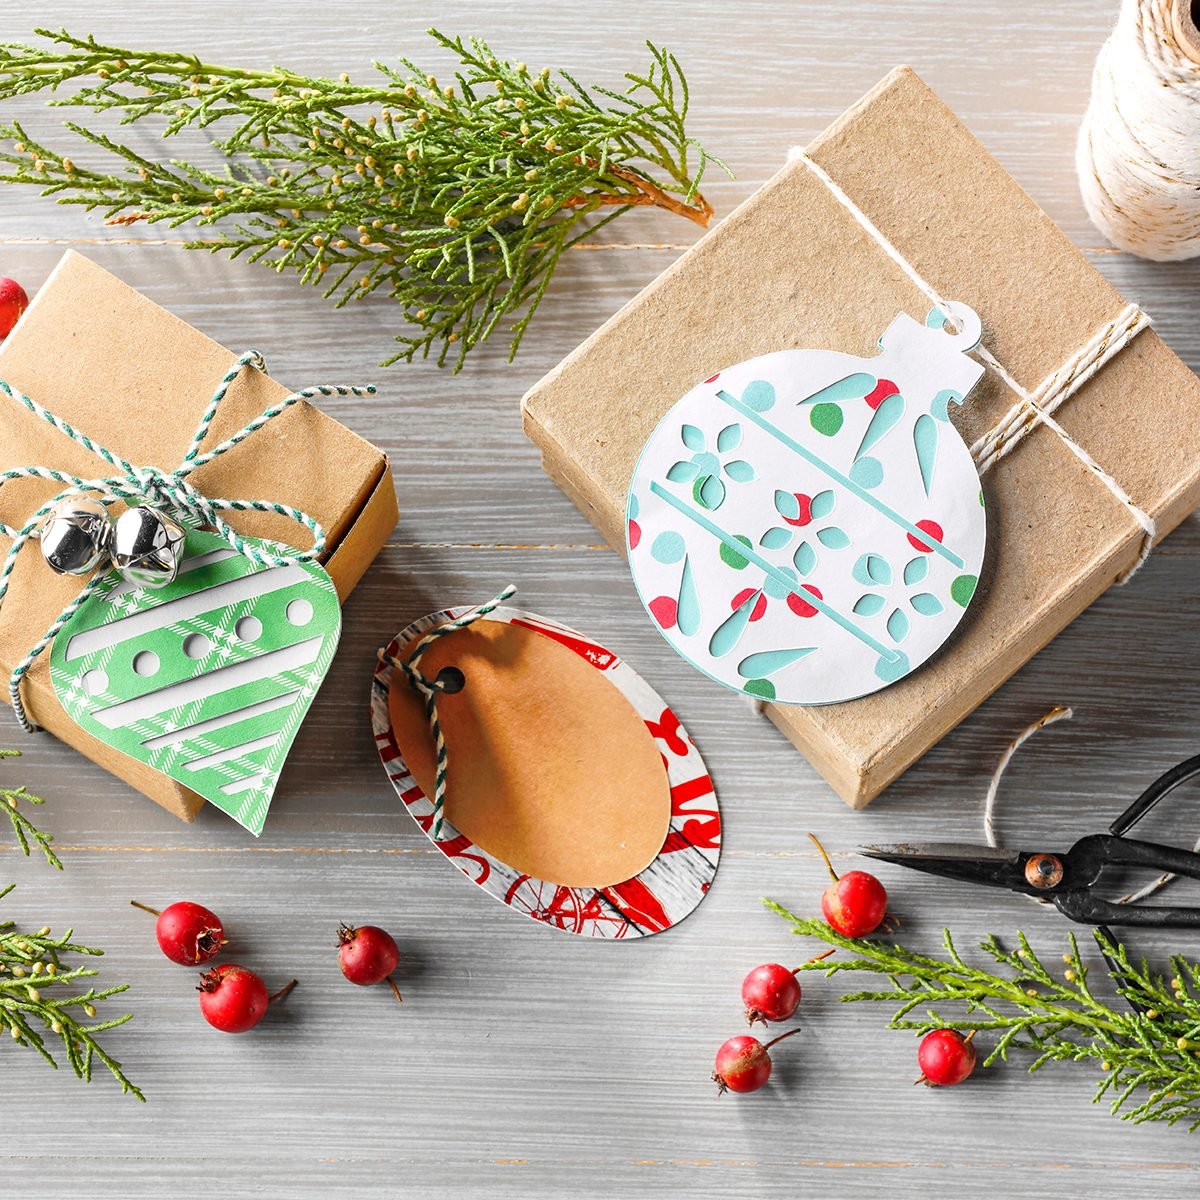 How to Make Homemade Christmas Ornaments | Taste of Home